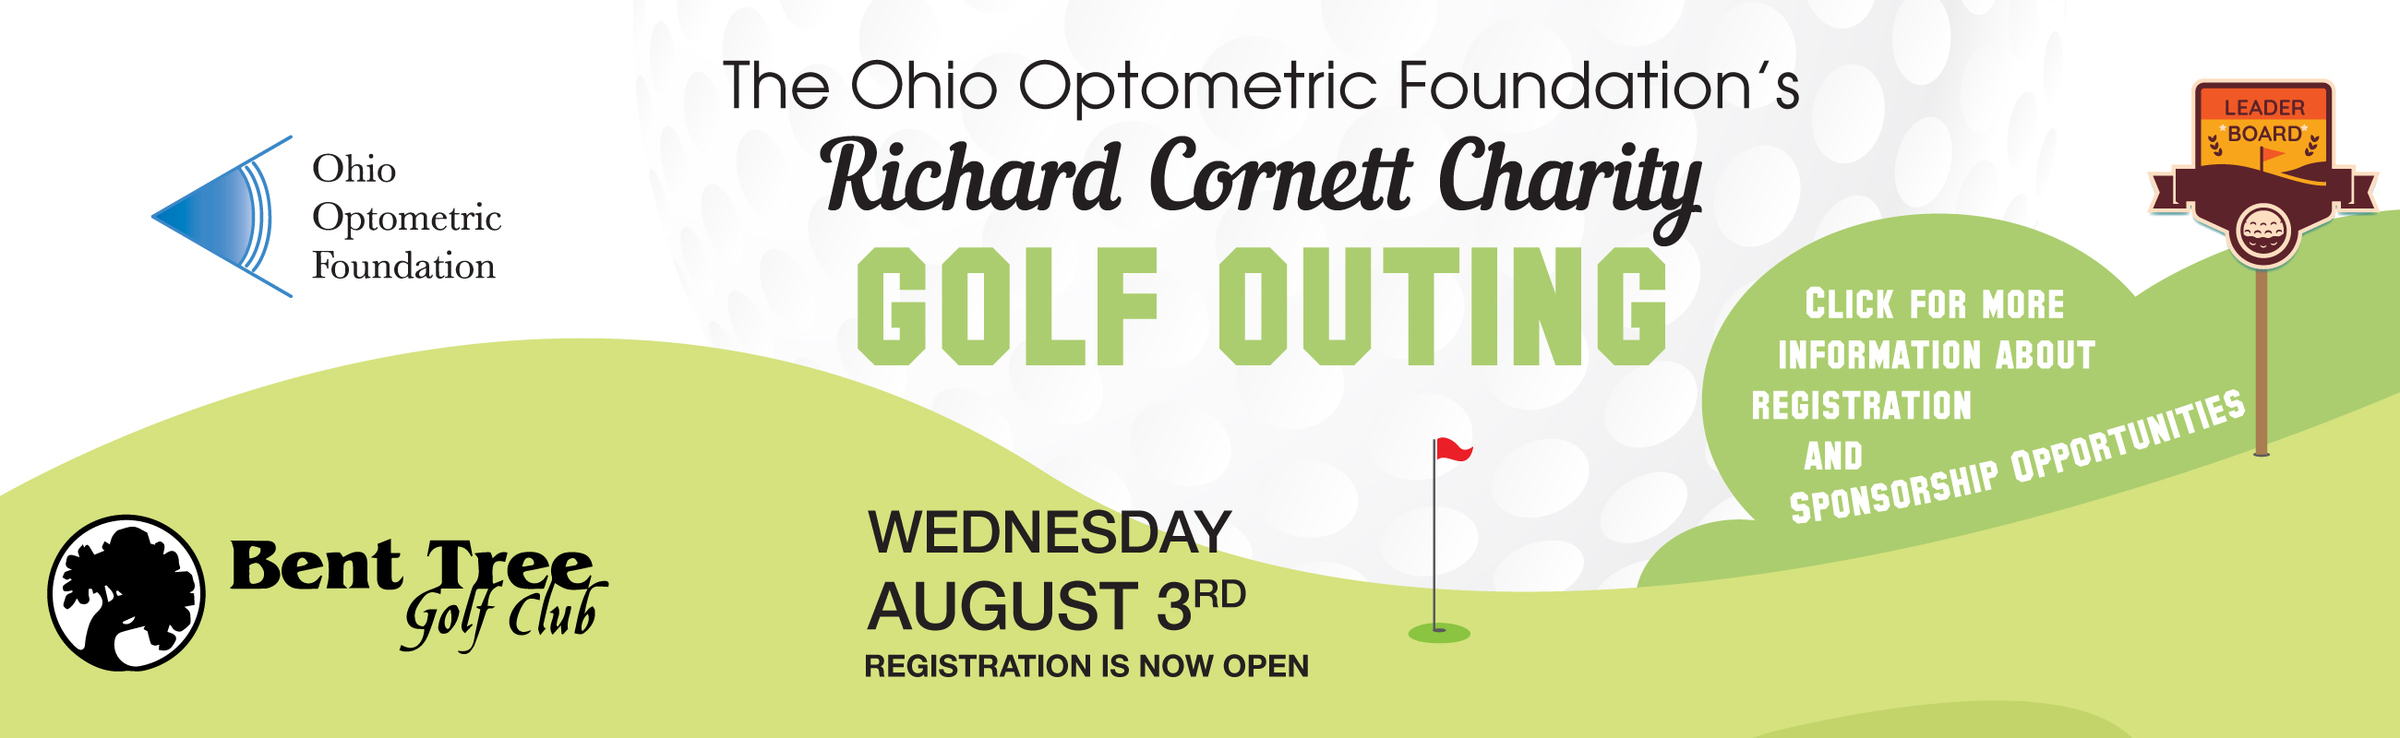 2022 OOF Richard Cornett Charity Golf Outing